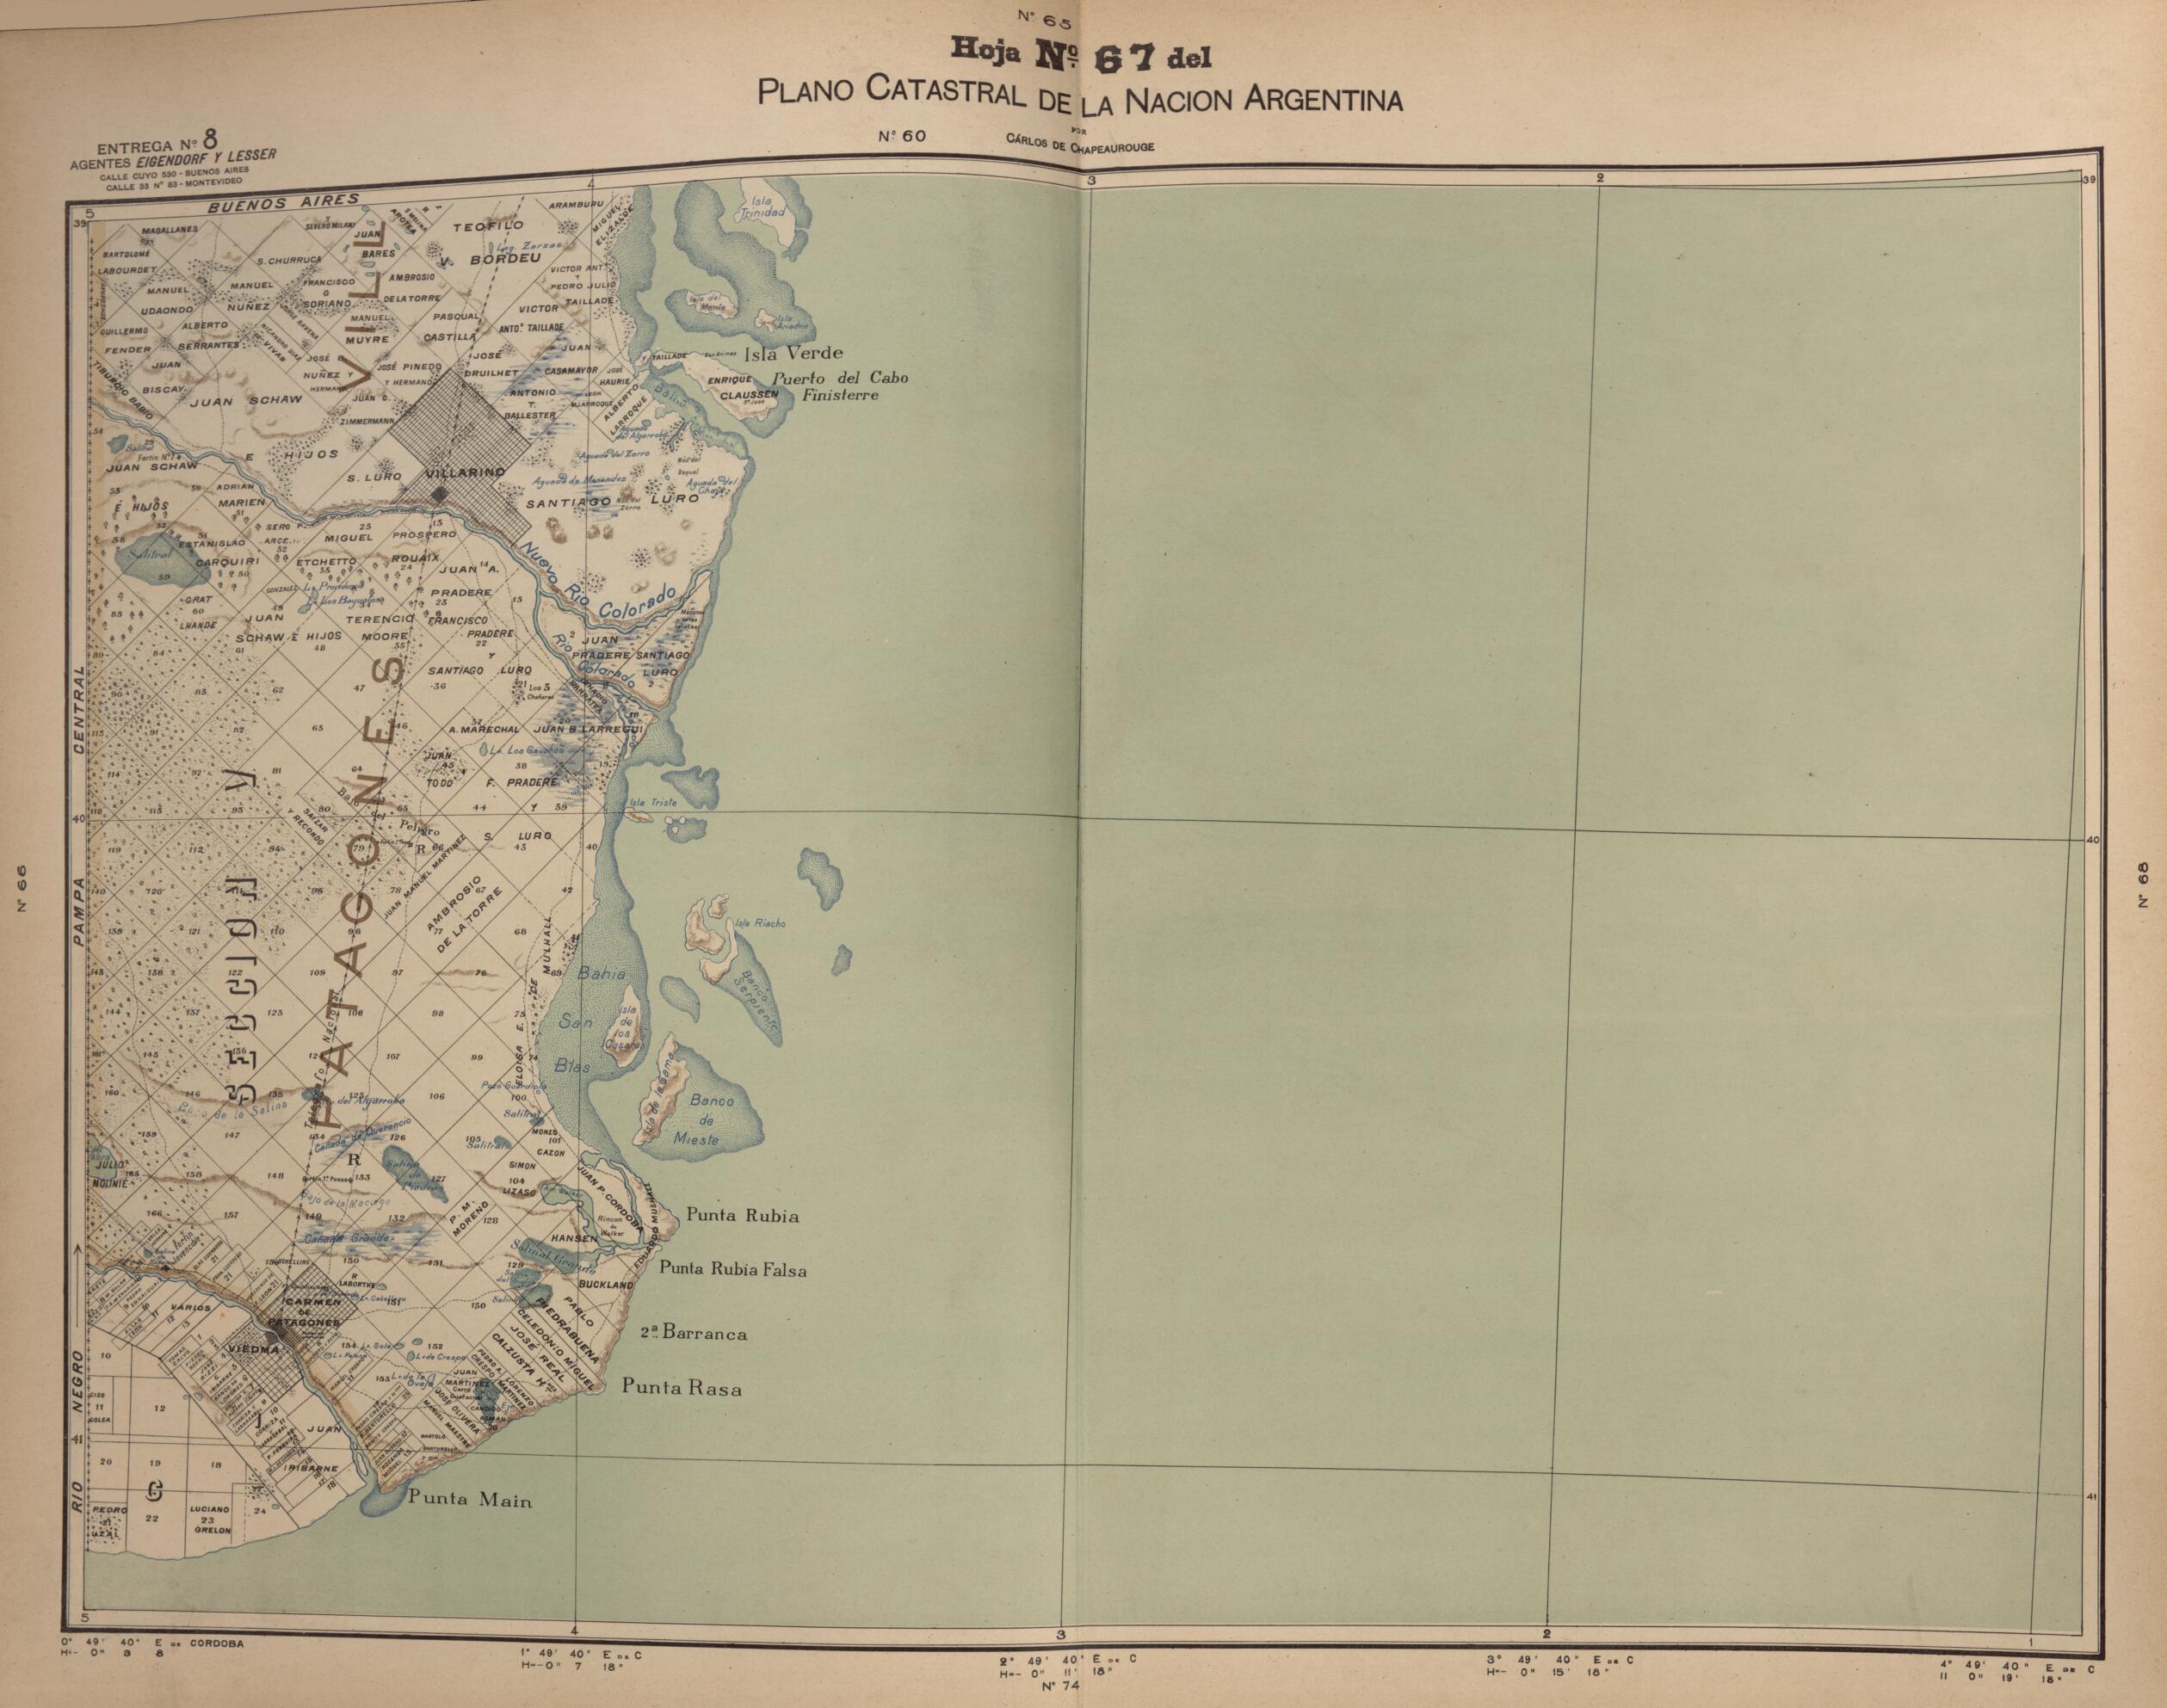 This old map of Plano Catastral De La Nacion Hoja No. 67 from República Argentina from 1905 was created by Carlos De Chapeaurouge in 1905